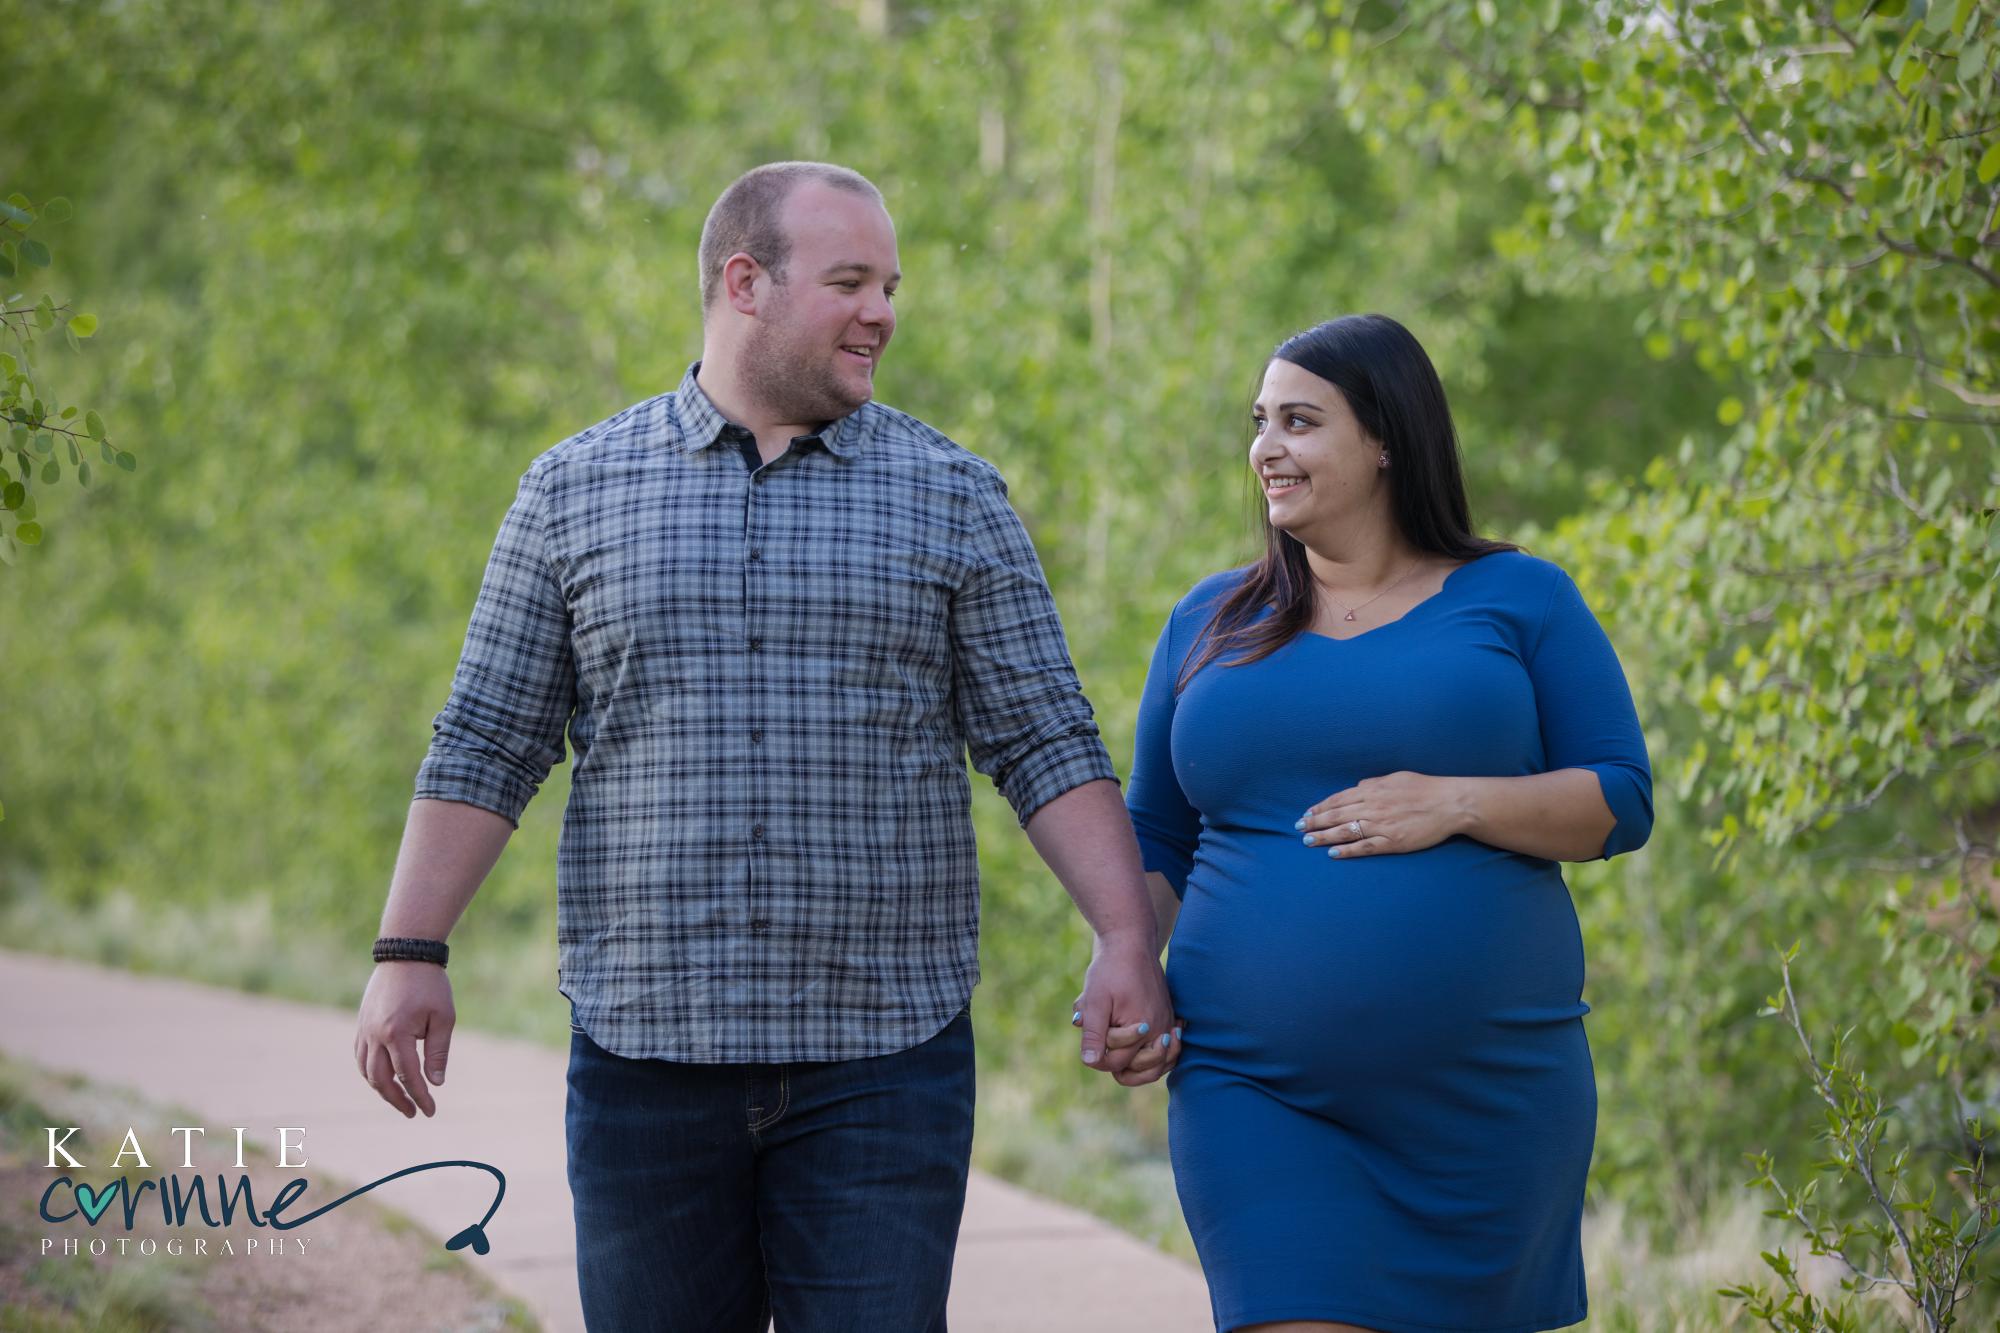 Colorado springs couple awaiting baby